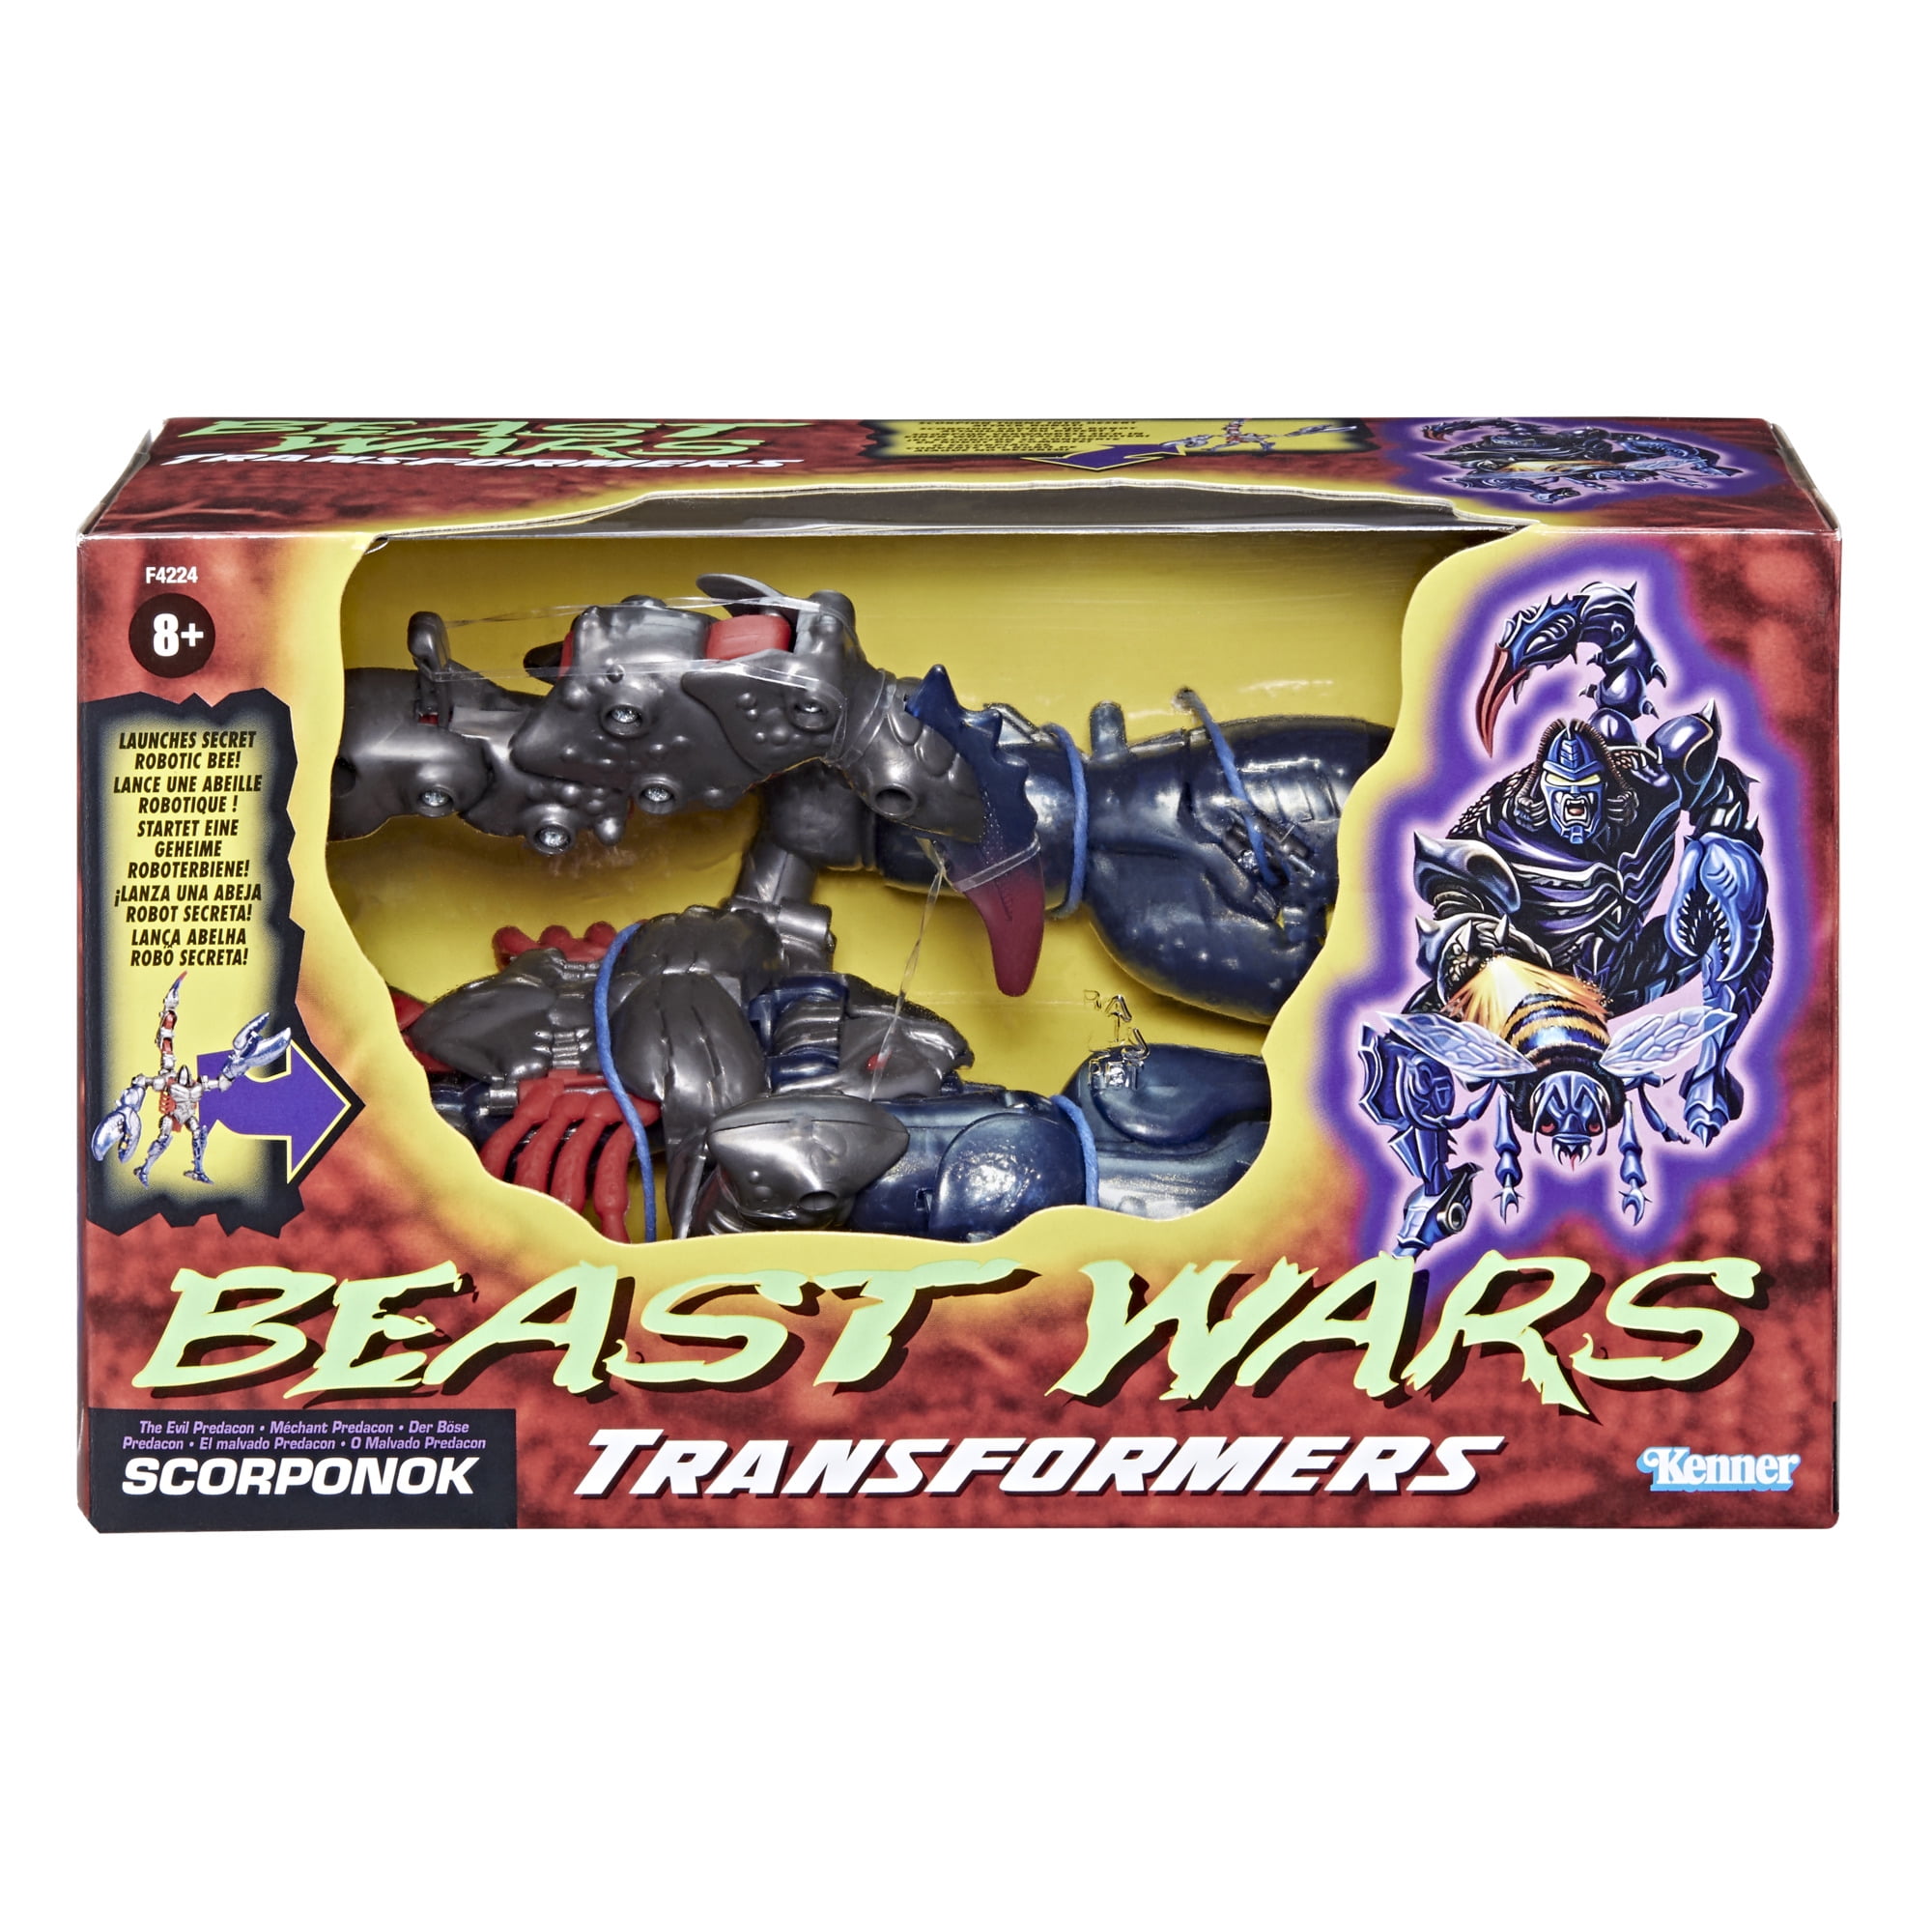 Transformer Beast Wars Beast Generation Book Japan NEW Collect them all